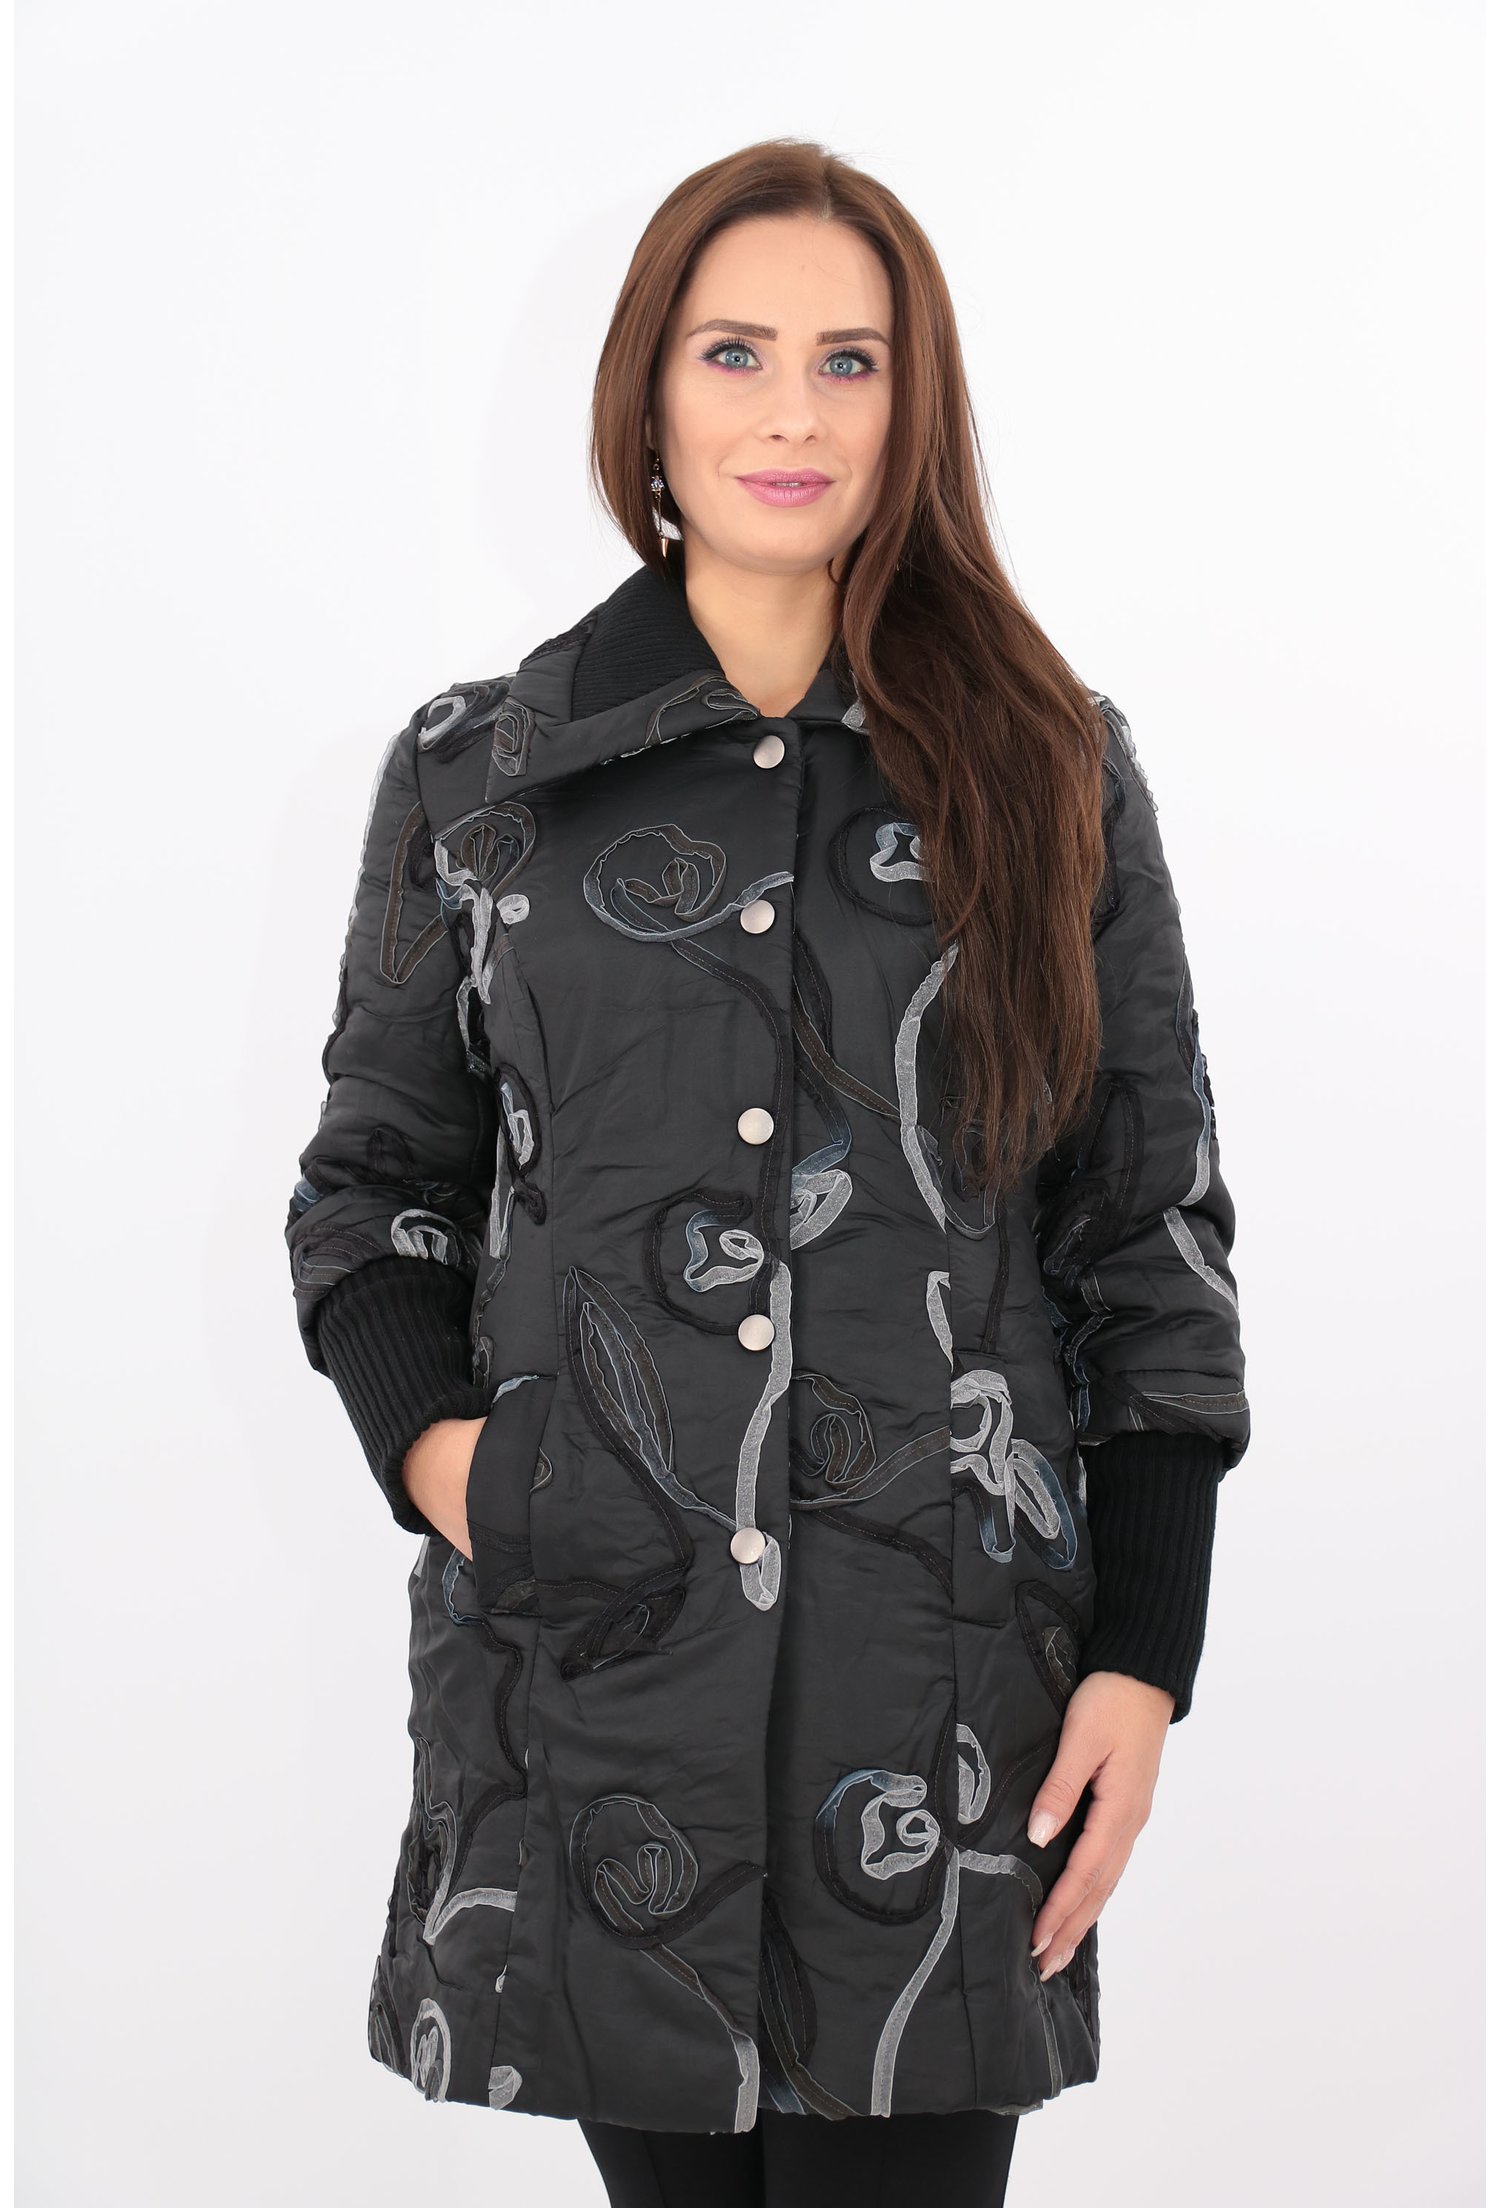 Jacheta matlasata din fâș cu model din panglica gri